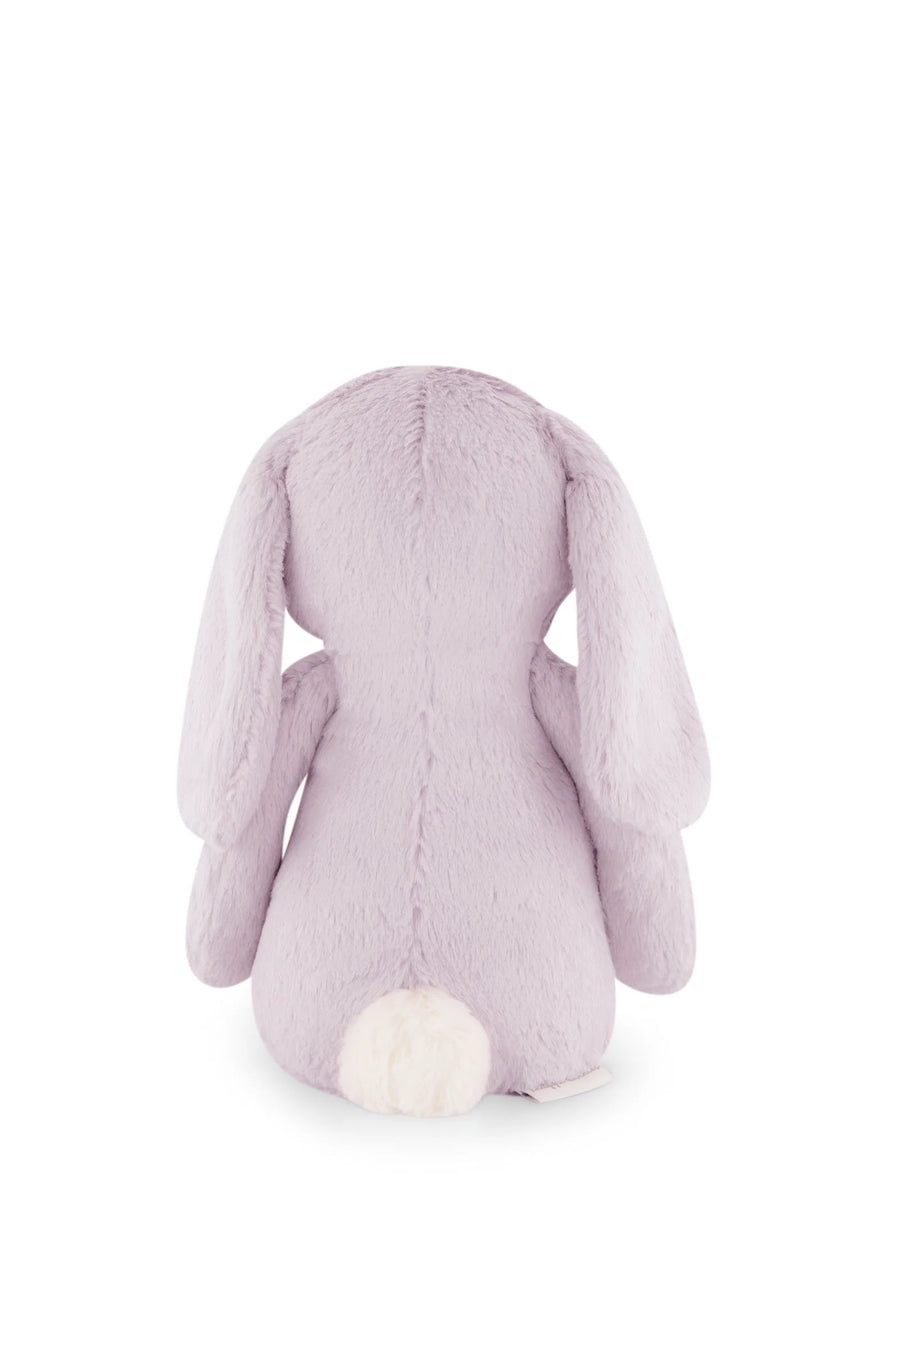 Snuggle Bunny - Penelope - Violet - 20cm